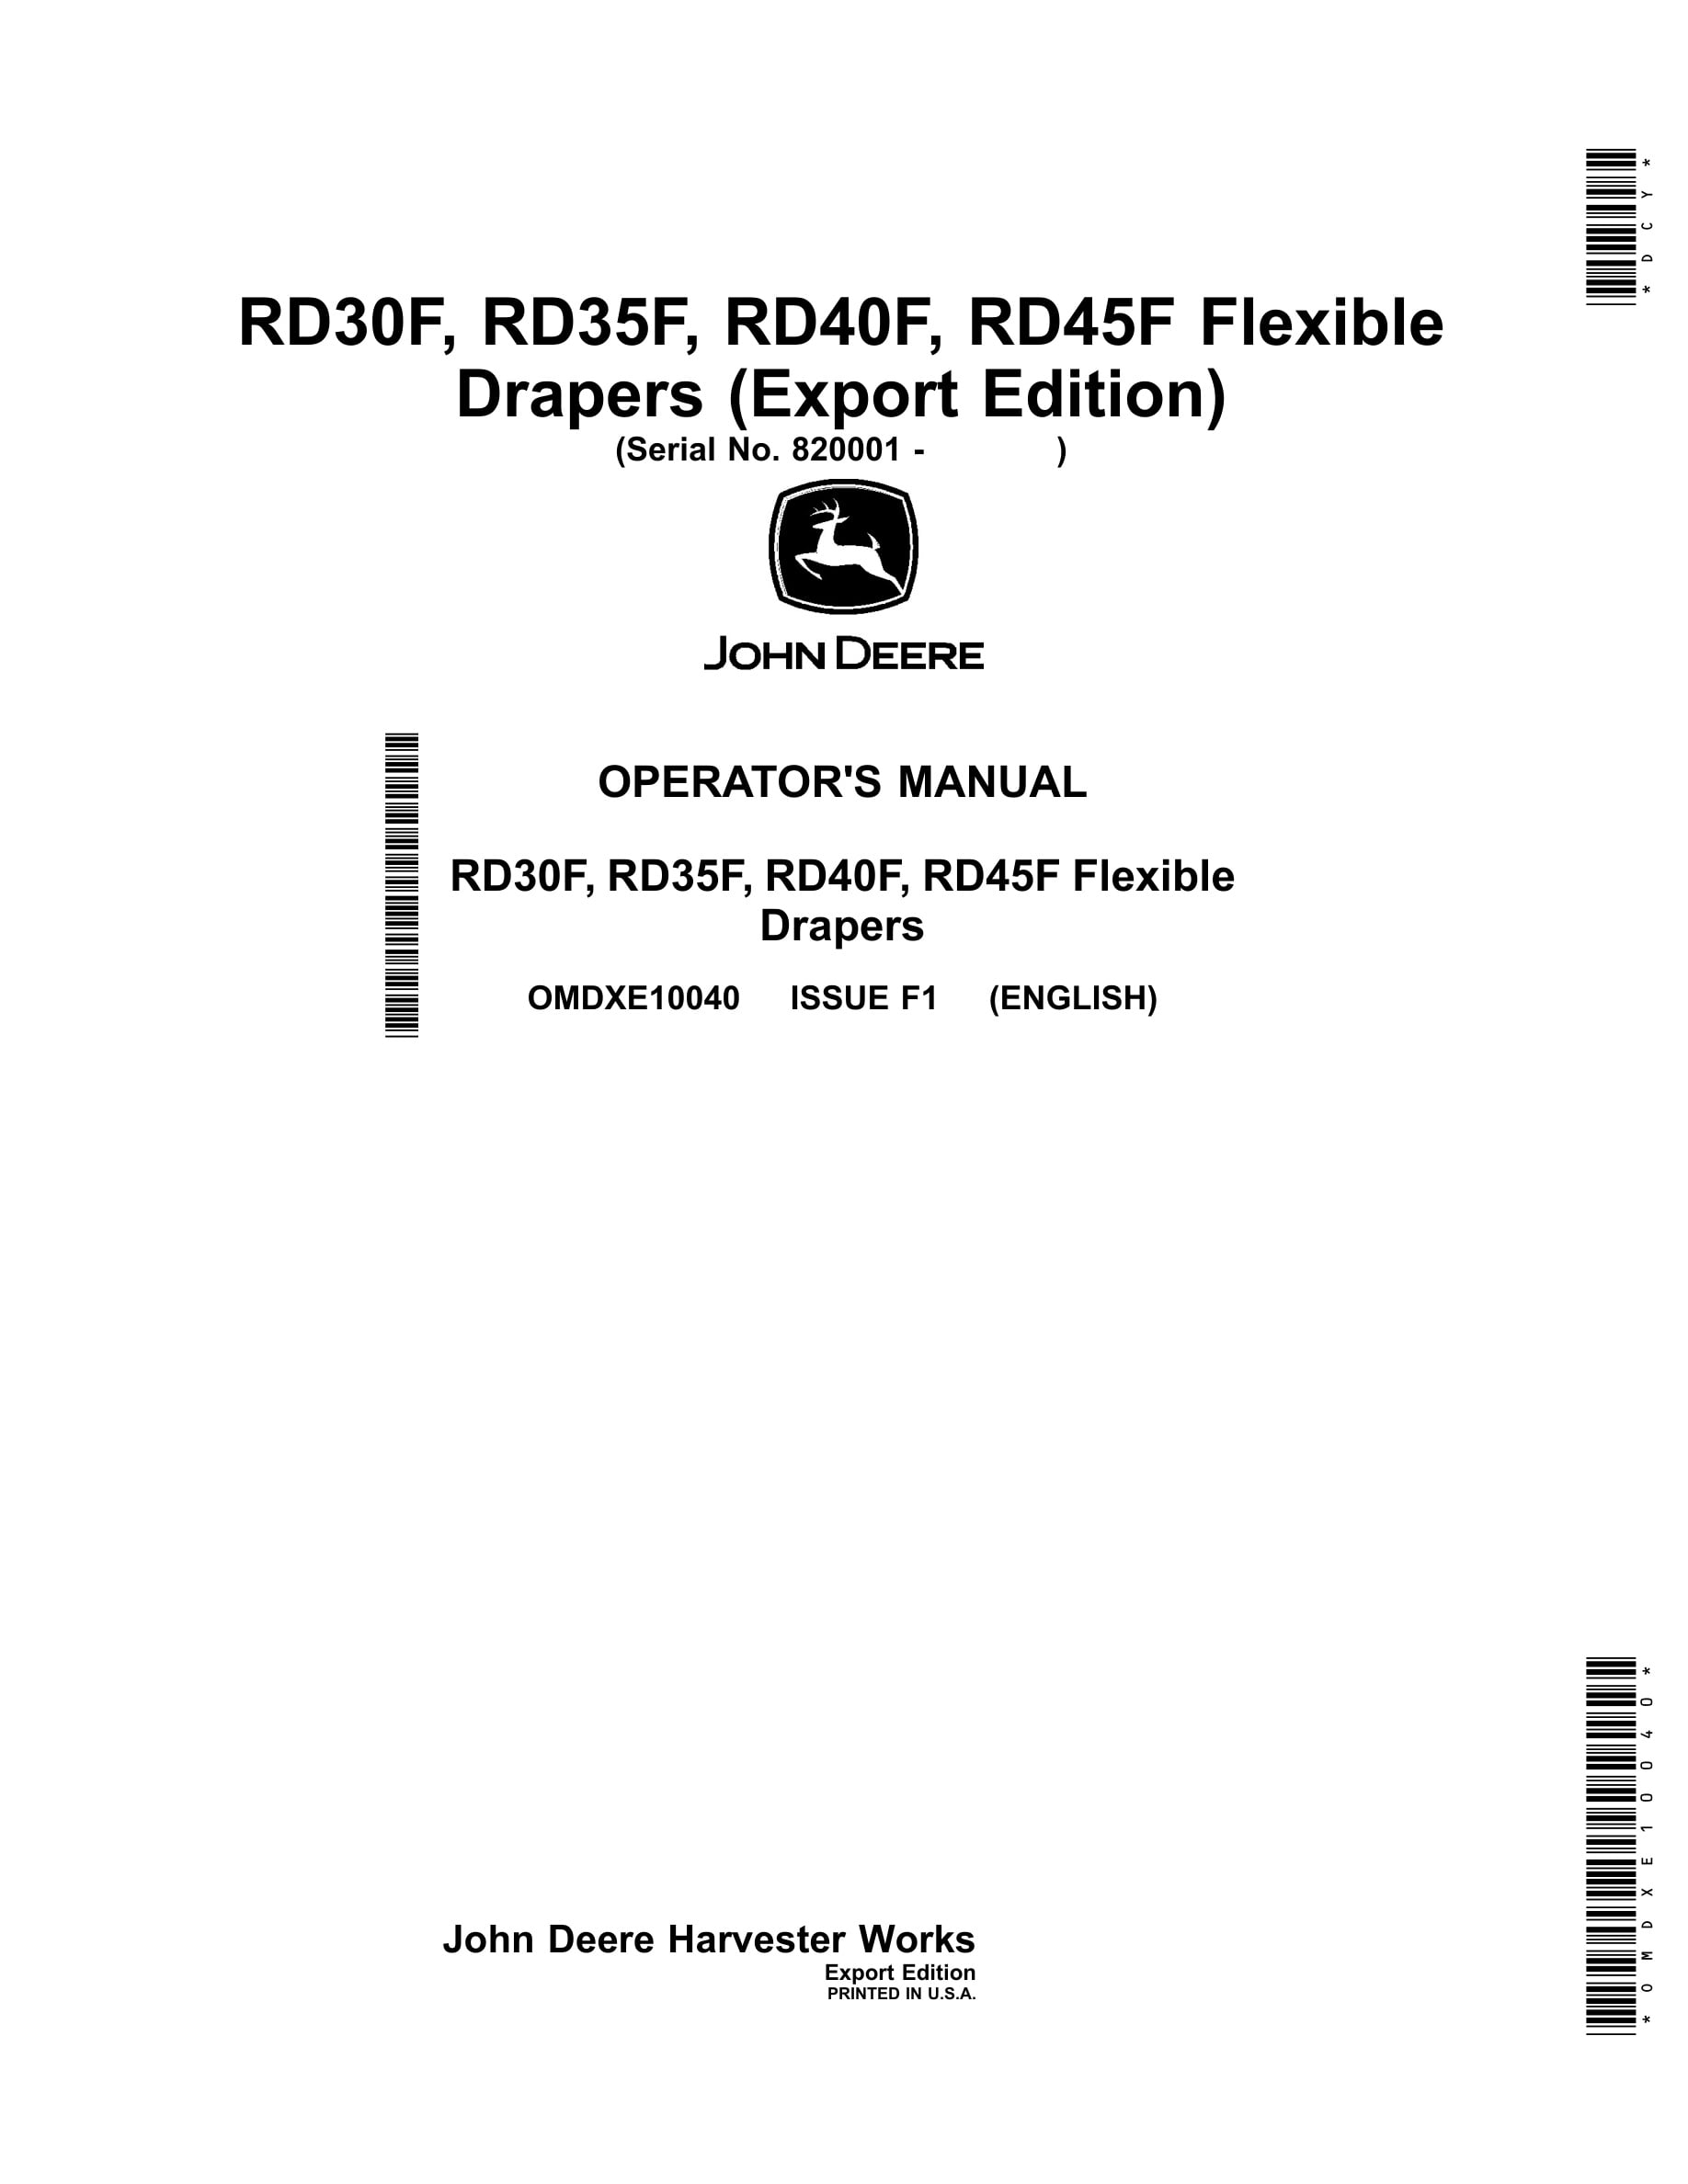 John Deere RD30F, RD35F, RD40F, RD45F Flexible Drapers Operator Manual OMDXE10040-1